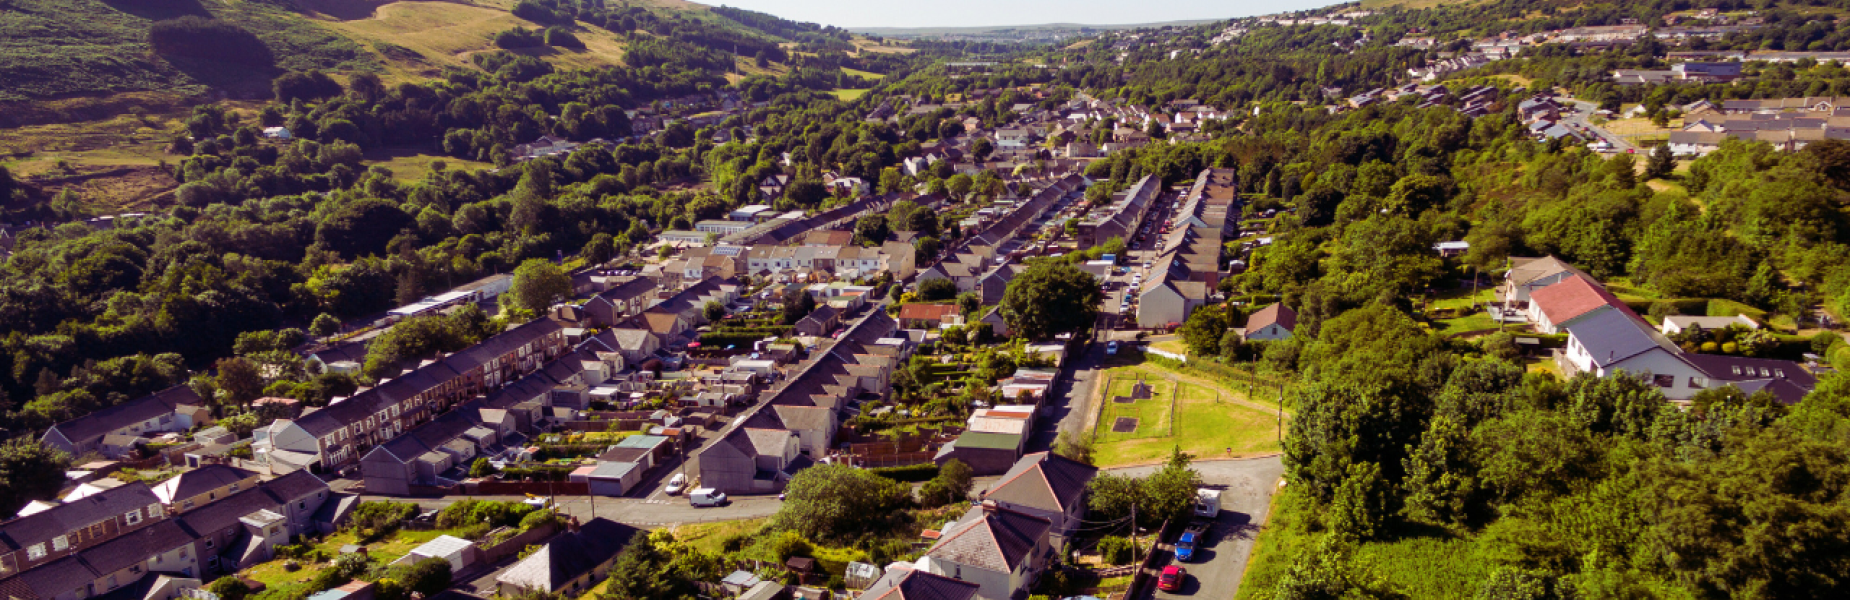 Aerial view of Blaenau Gwent